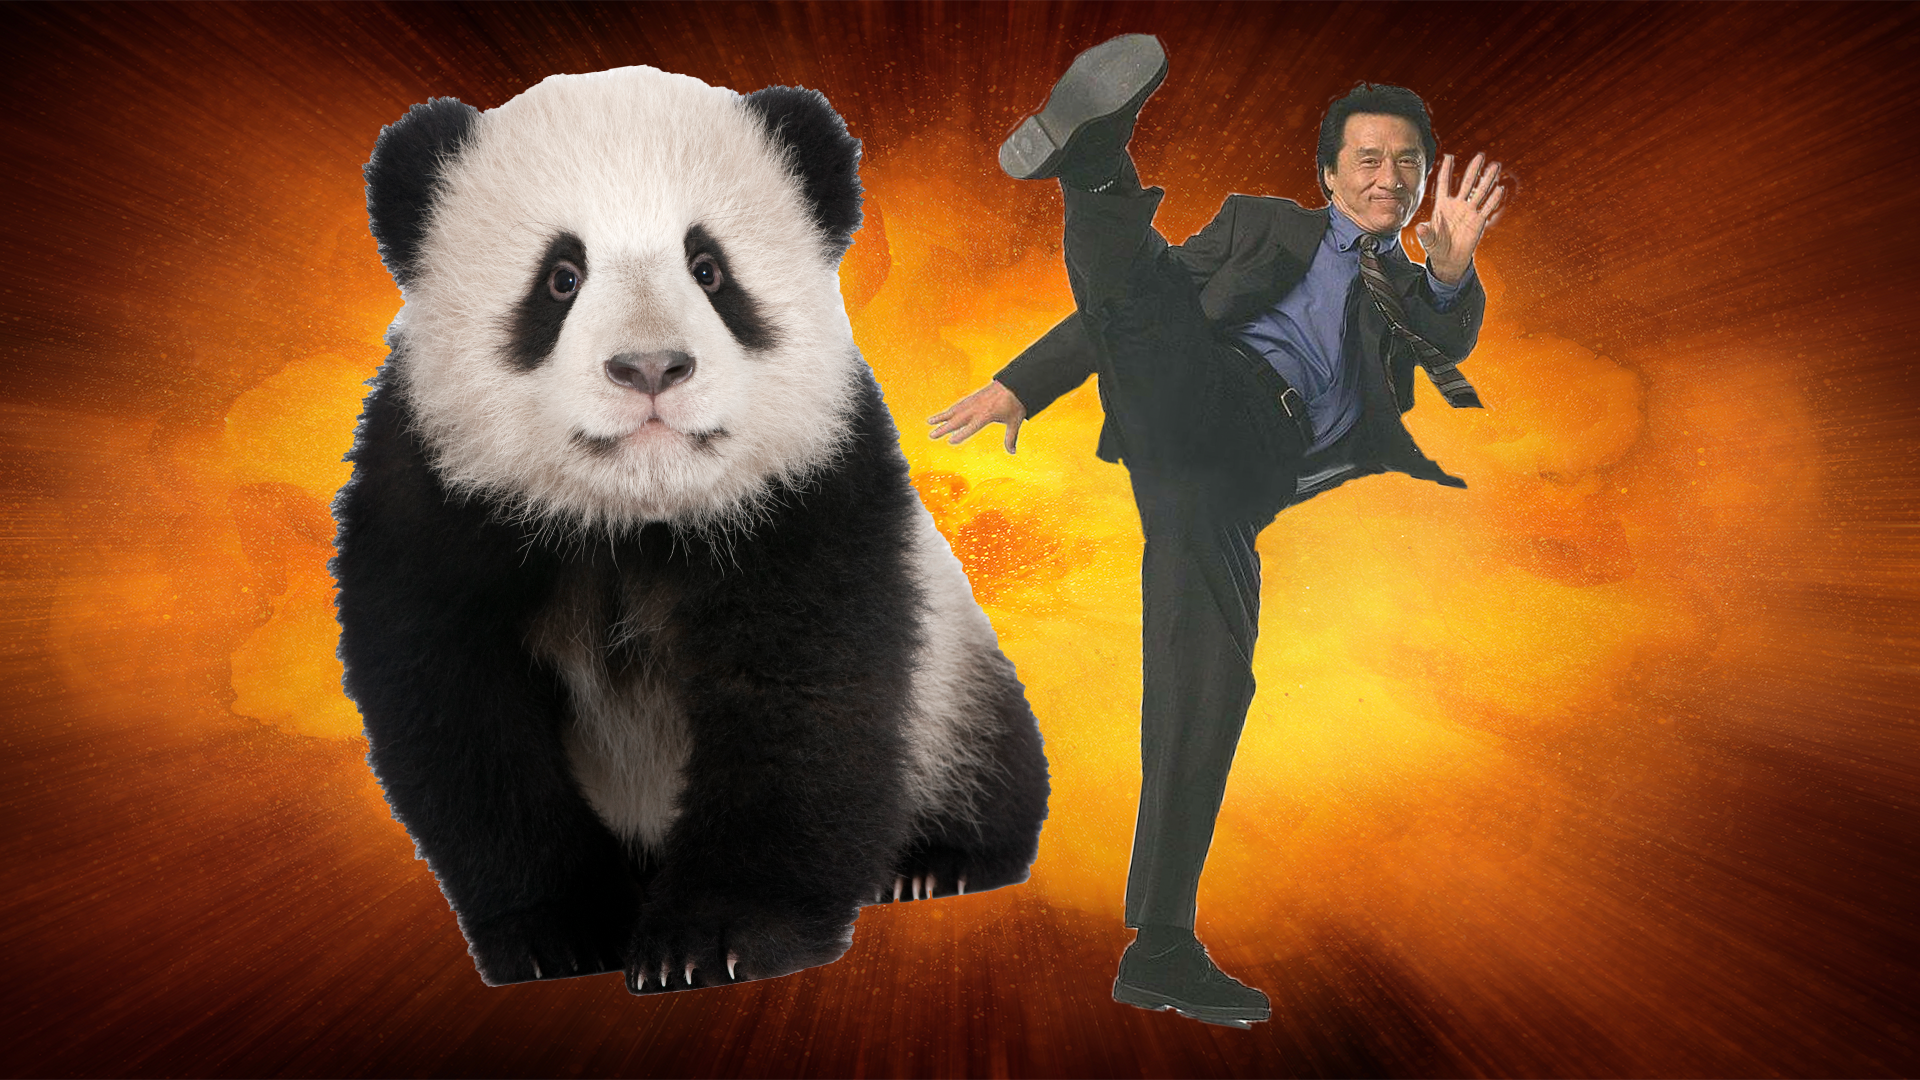 Jackie Chan and a big panda